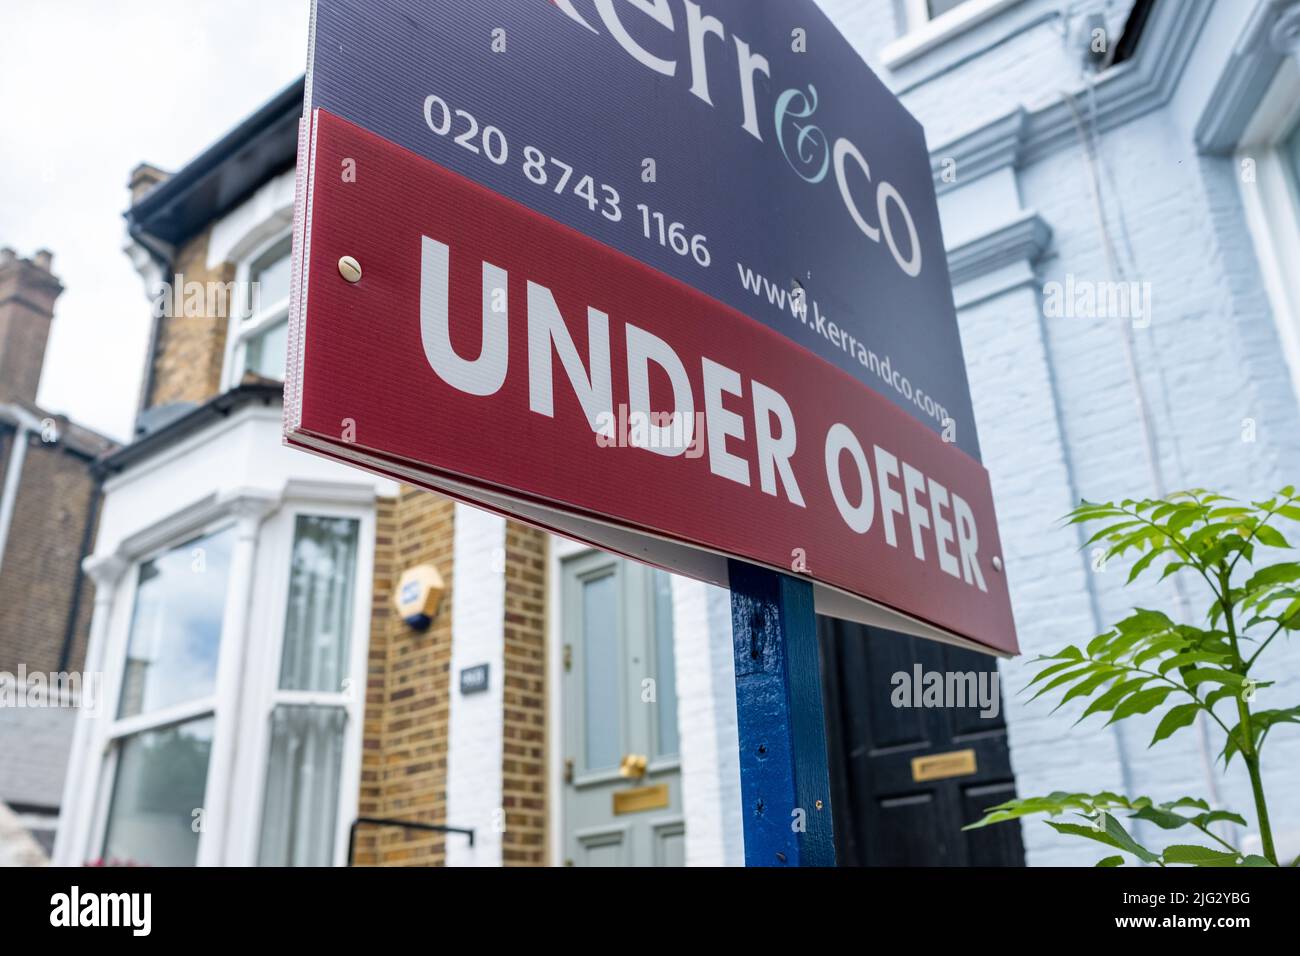 London- June 2022: Estate agent 'Under Offer' sign on street of suburban British houses Stock Photo